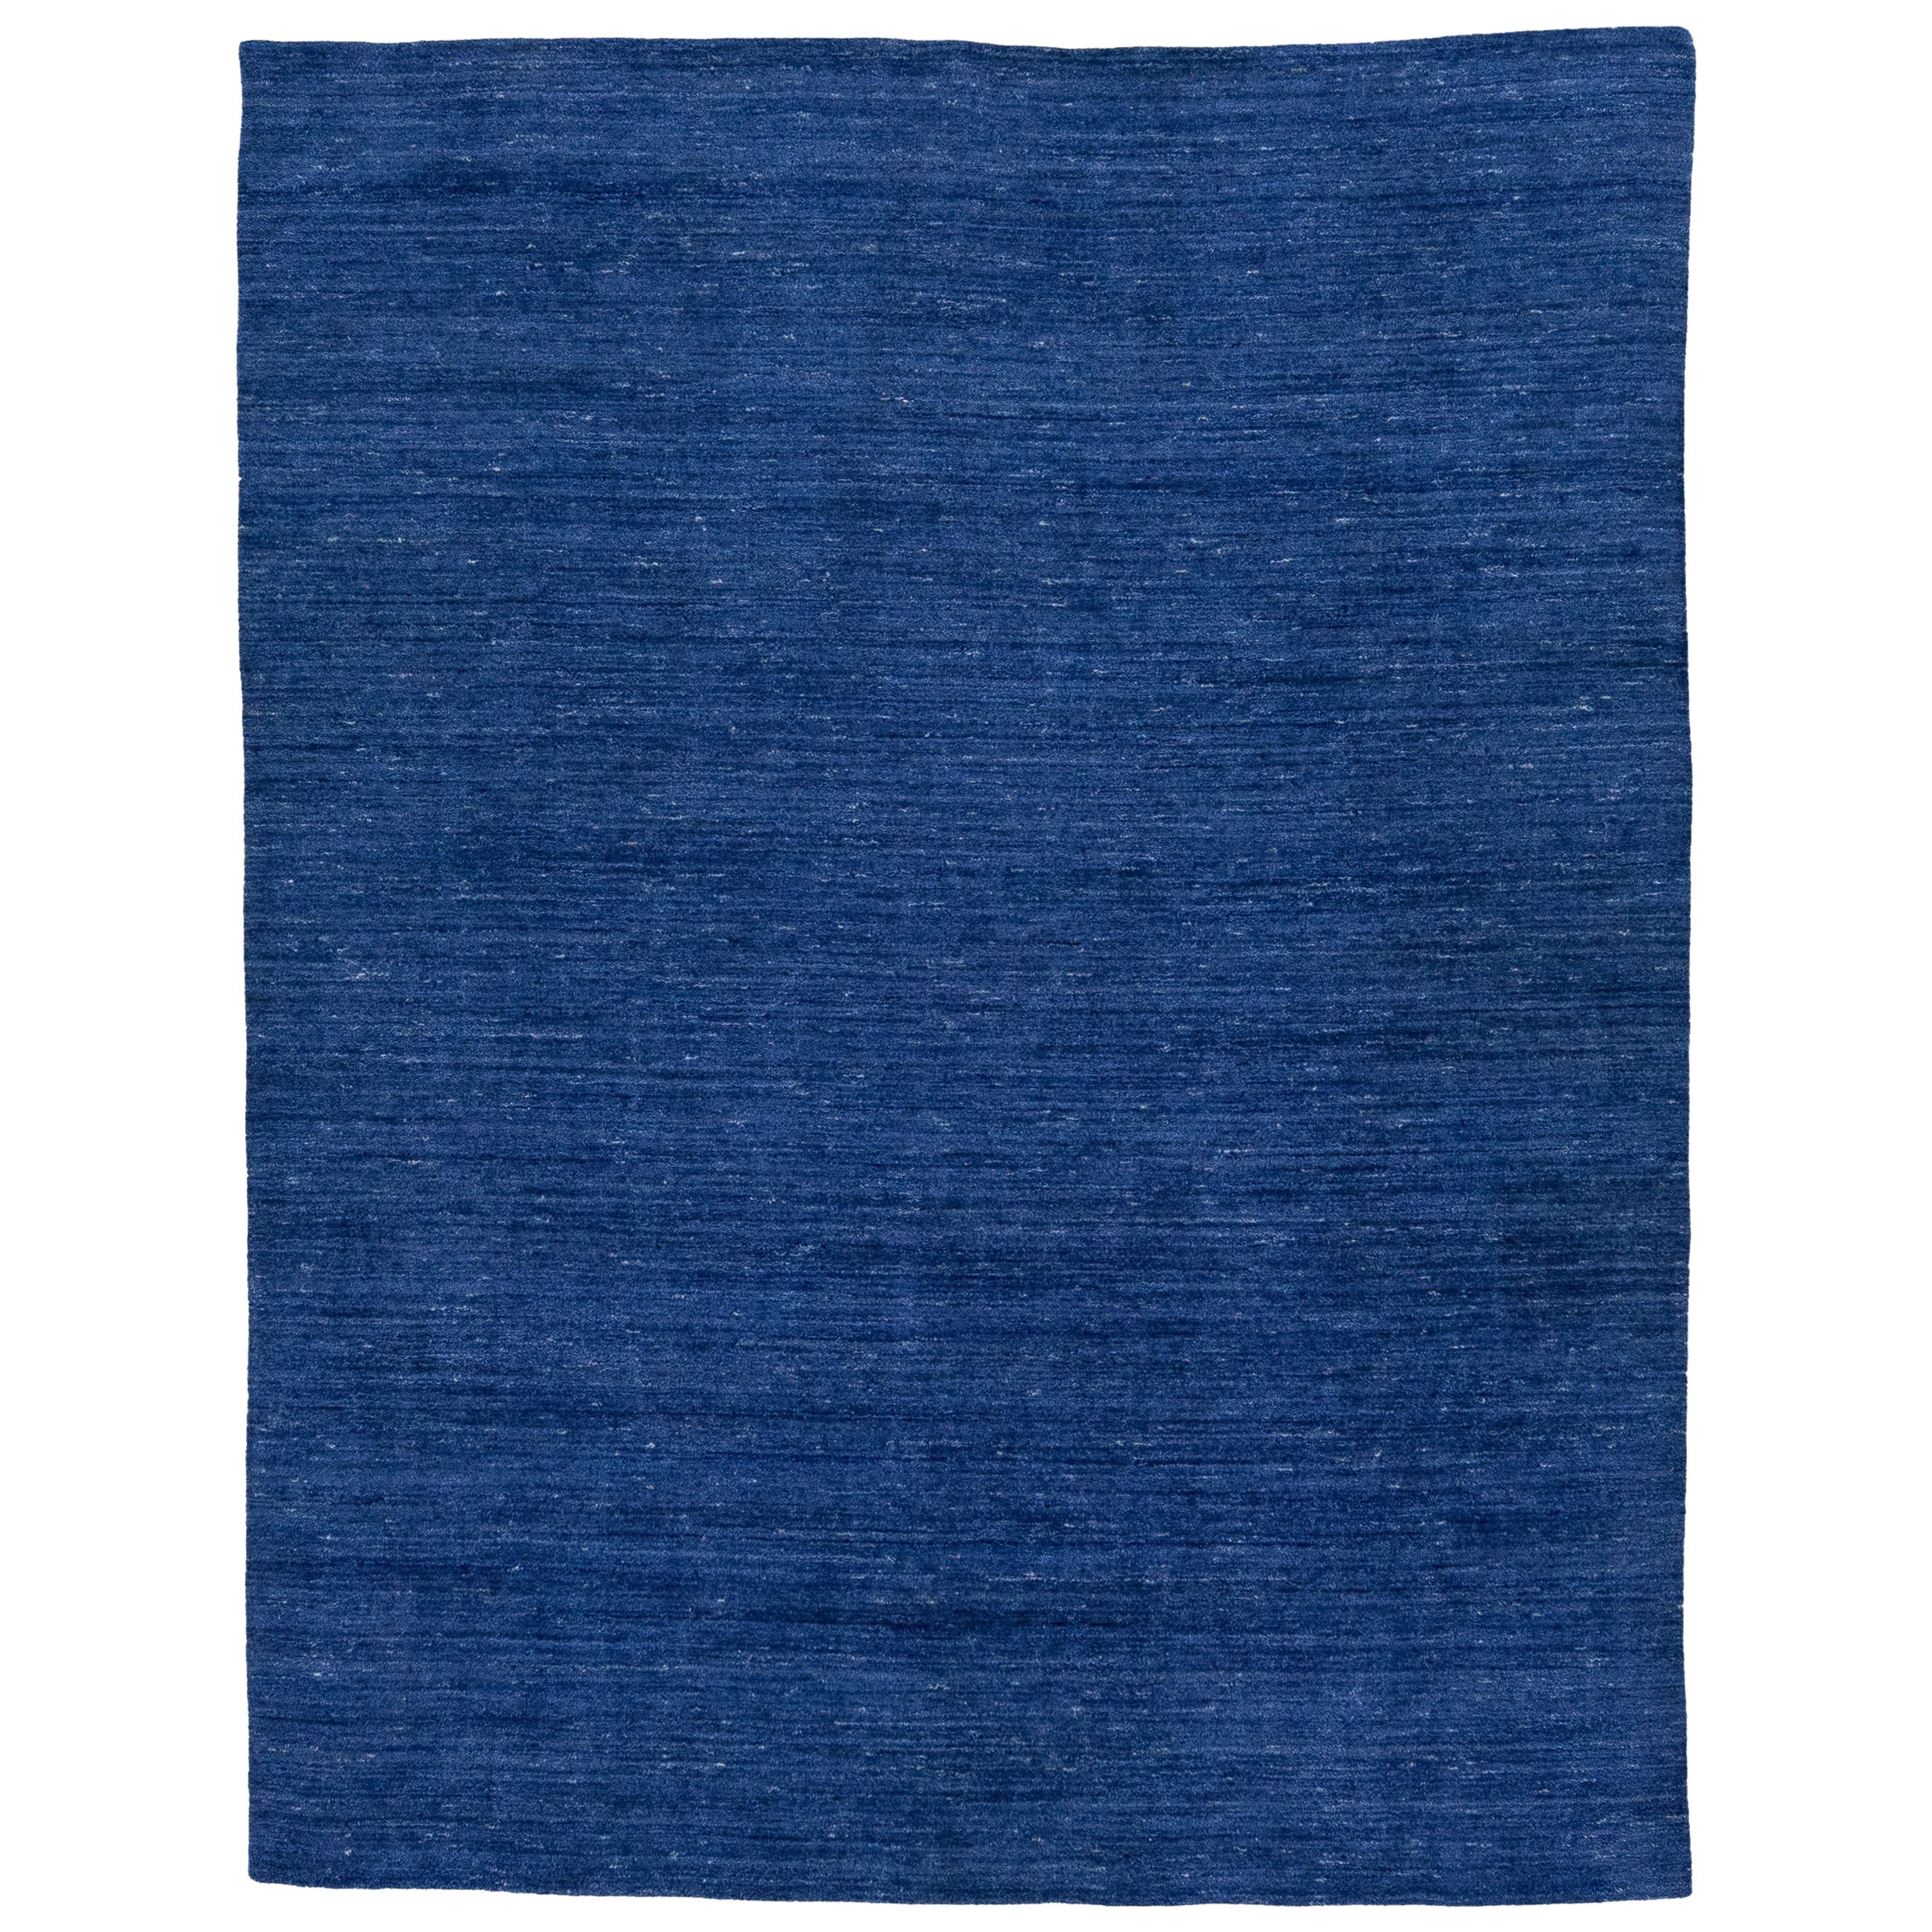 Modern Gabbeh Style Handmade Wool Rug with Solid Blue Motif